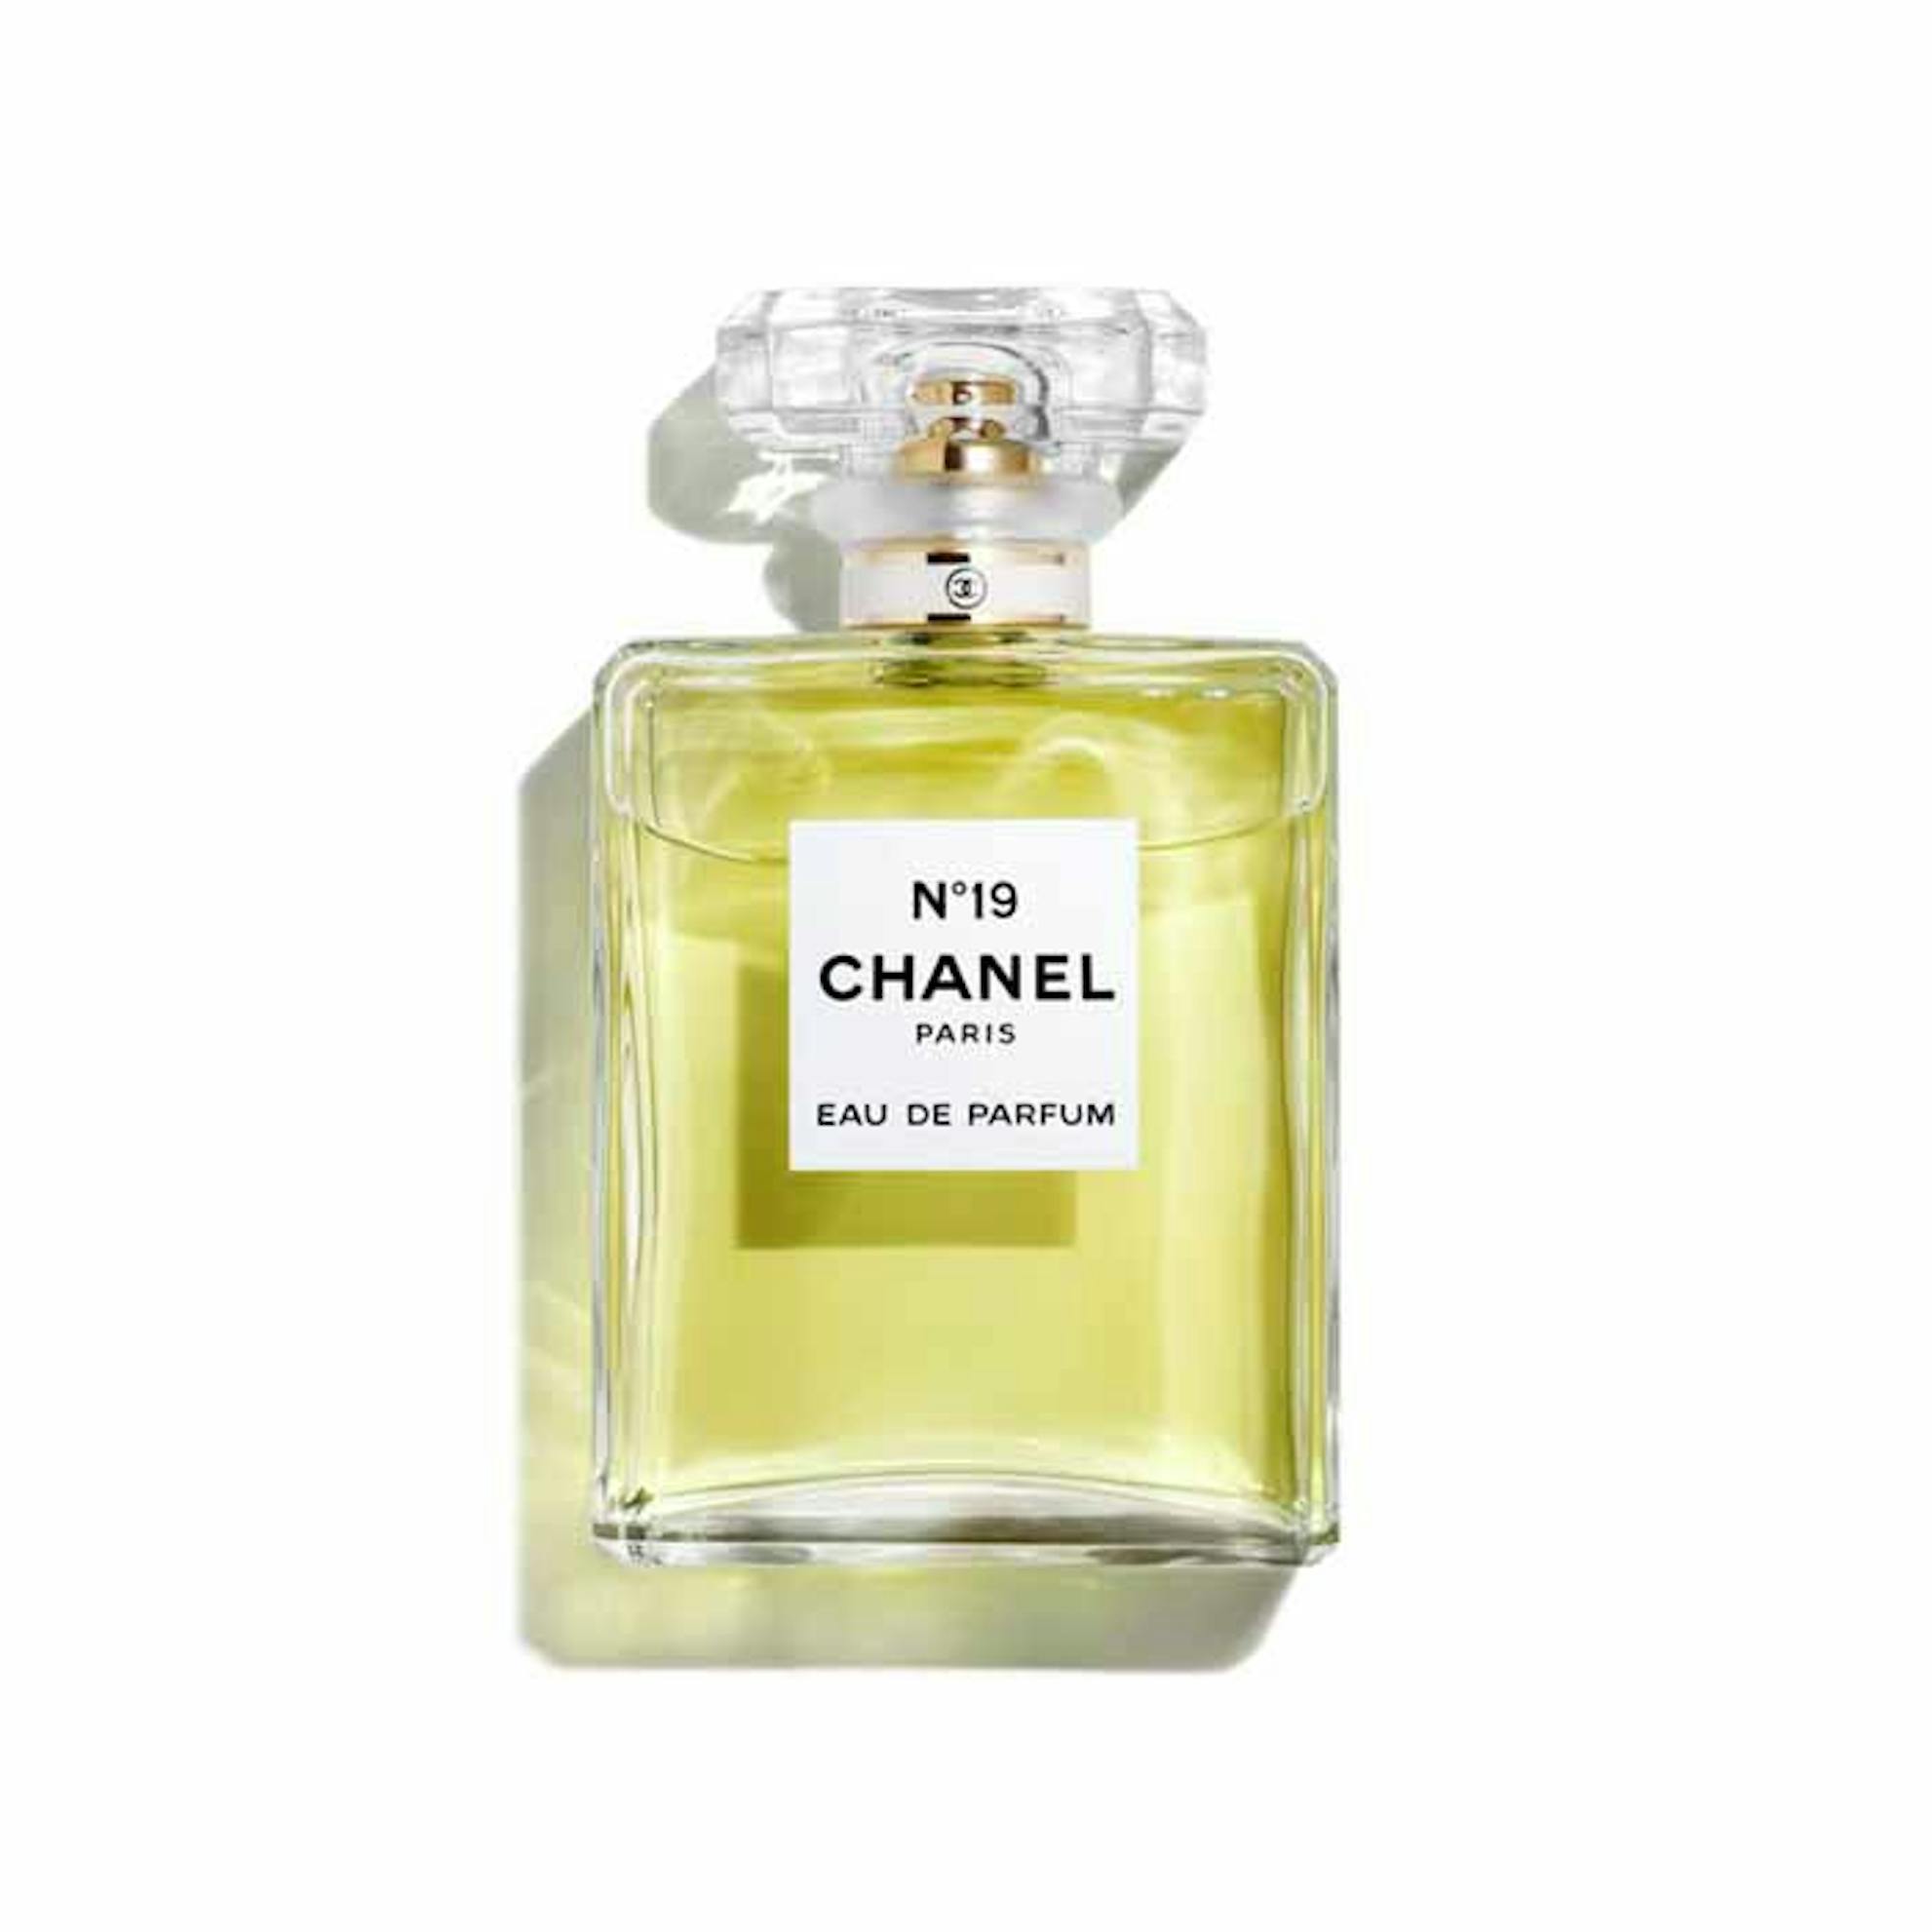 Chanel Allure Eau De Parfum Spray 50ml/1.7oz - Eau De Parfum, Free  Worldwide Shipping